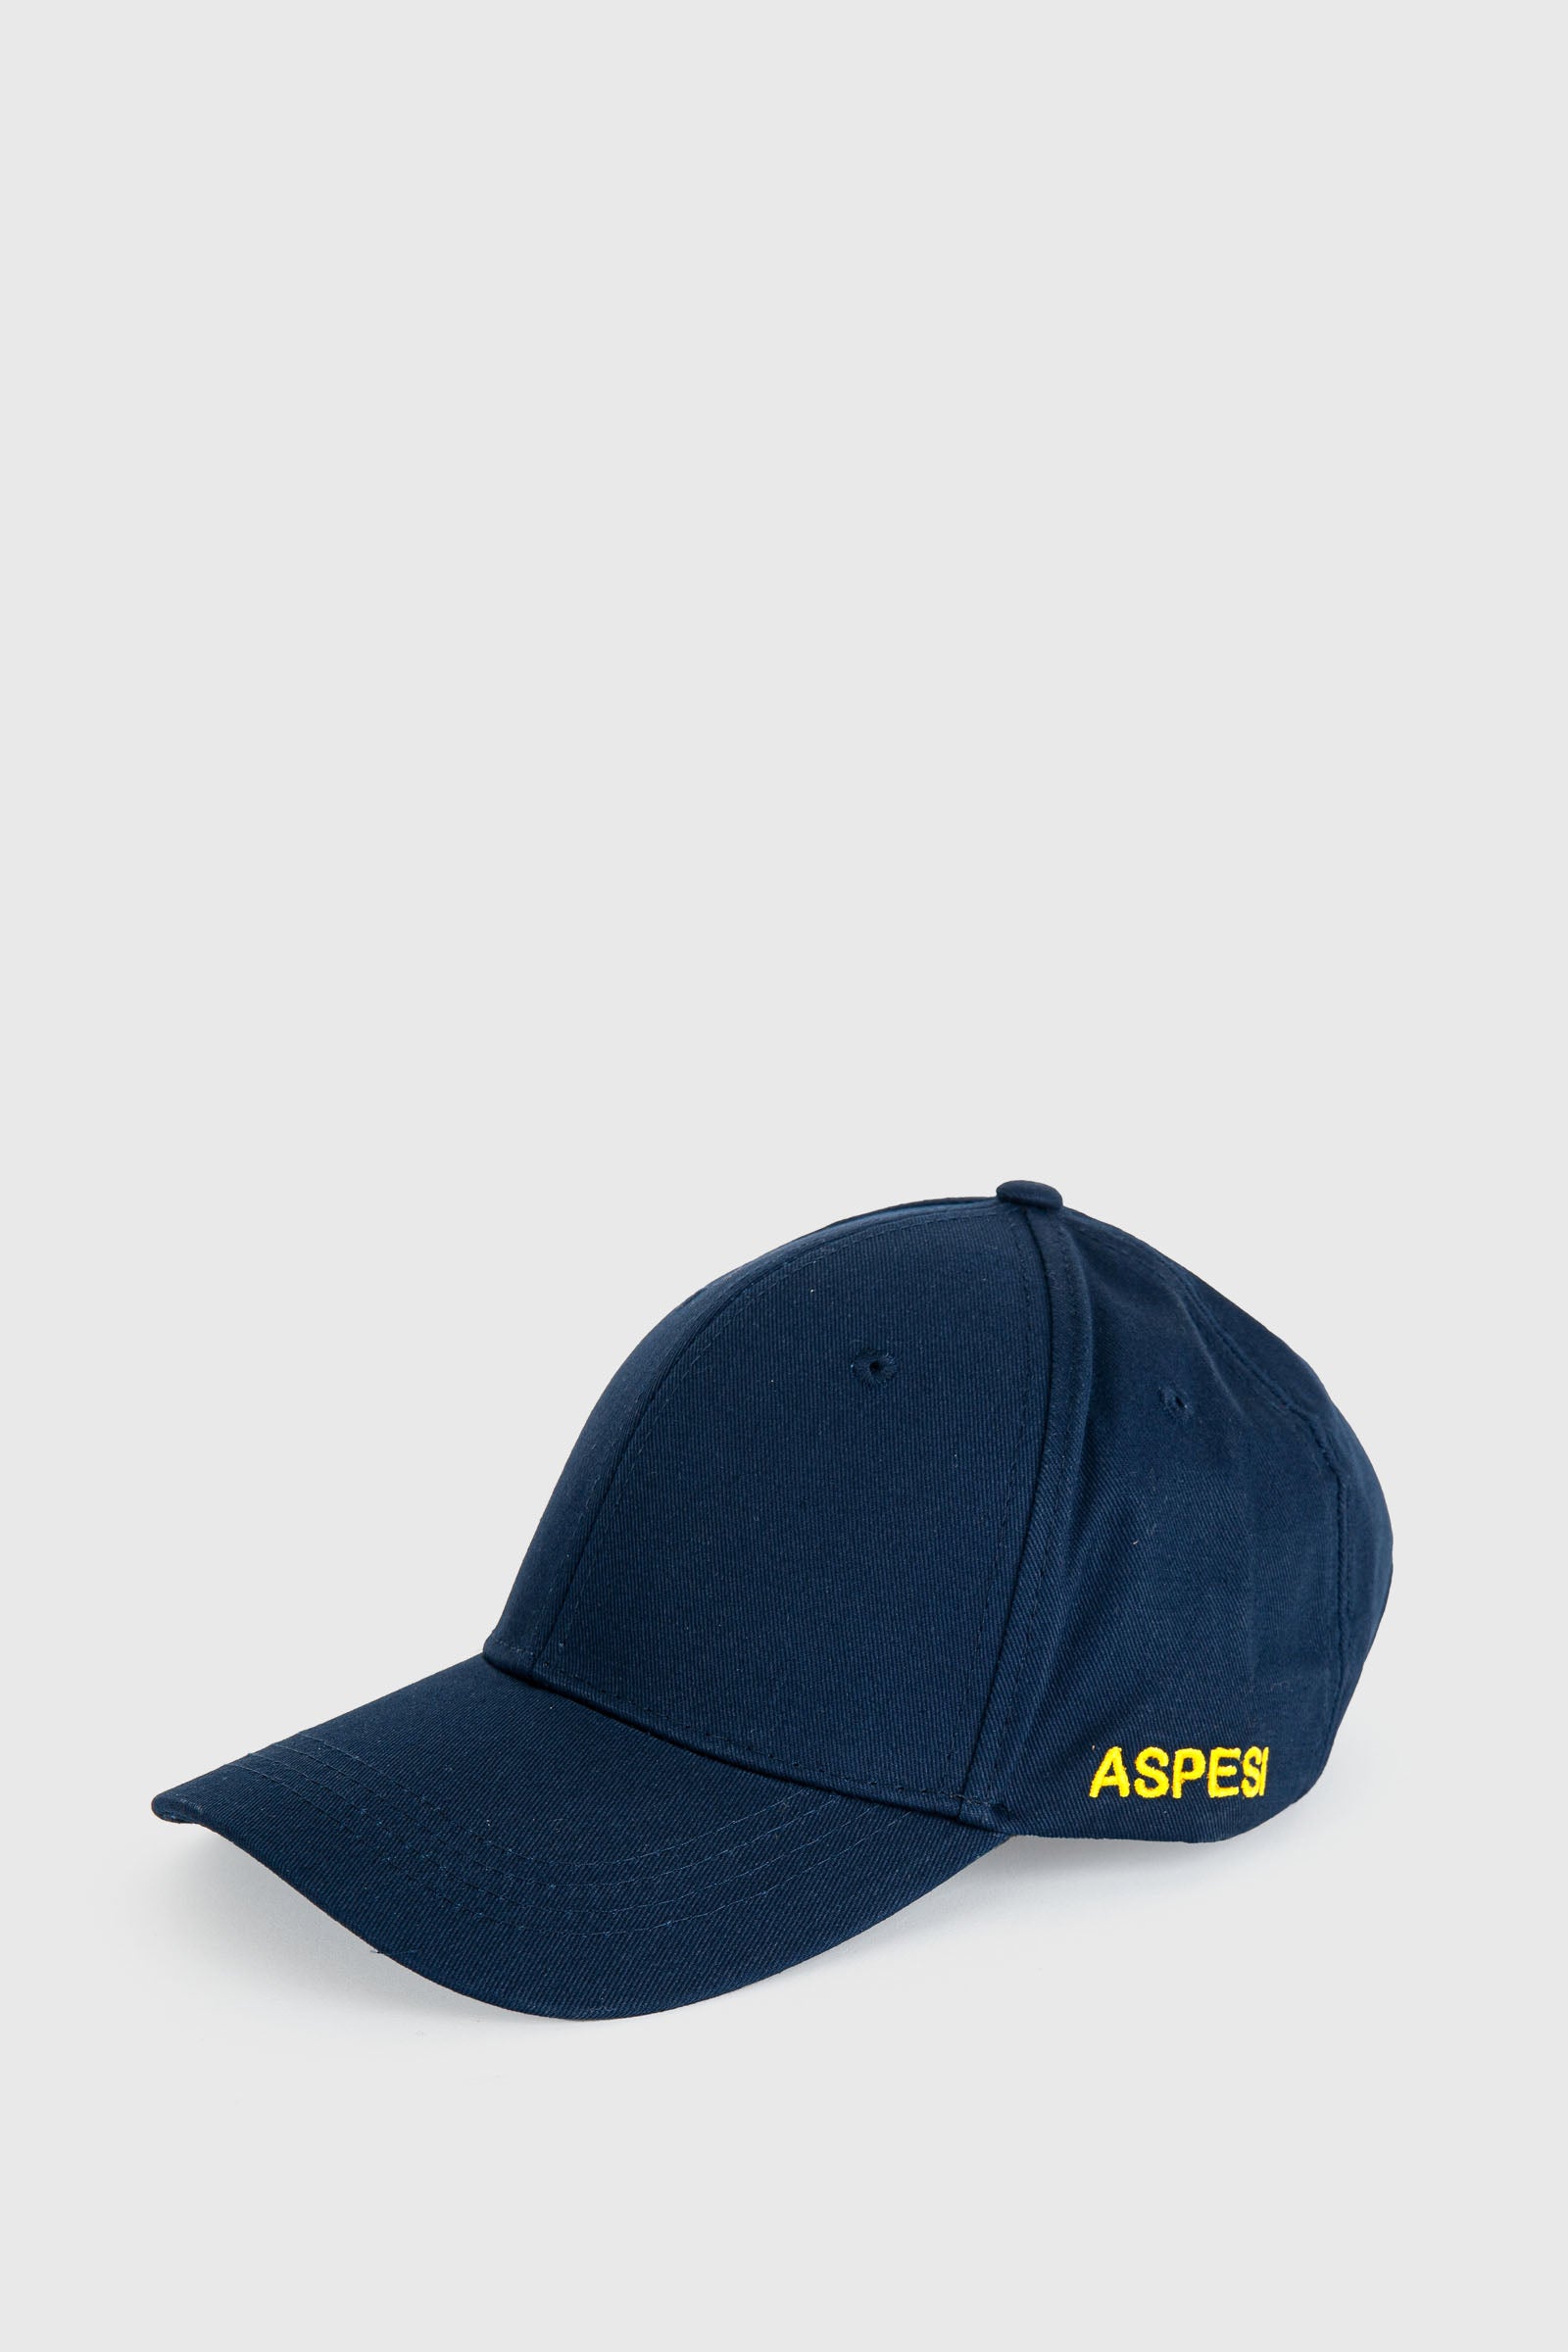 Aspesi Cotton Blue Hat - 1